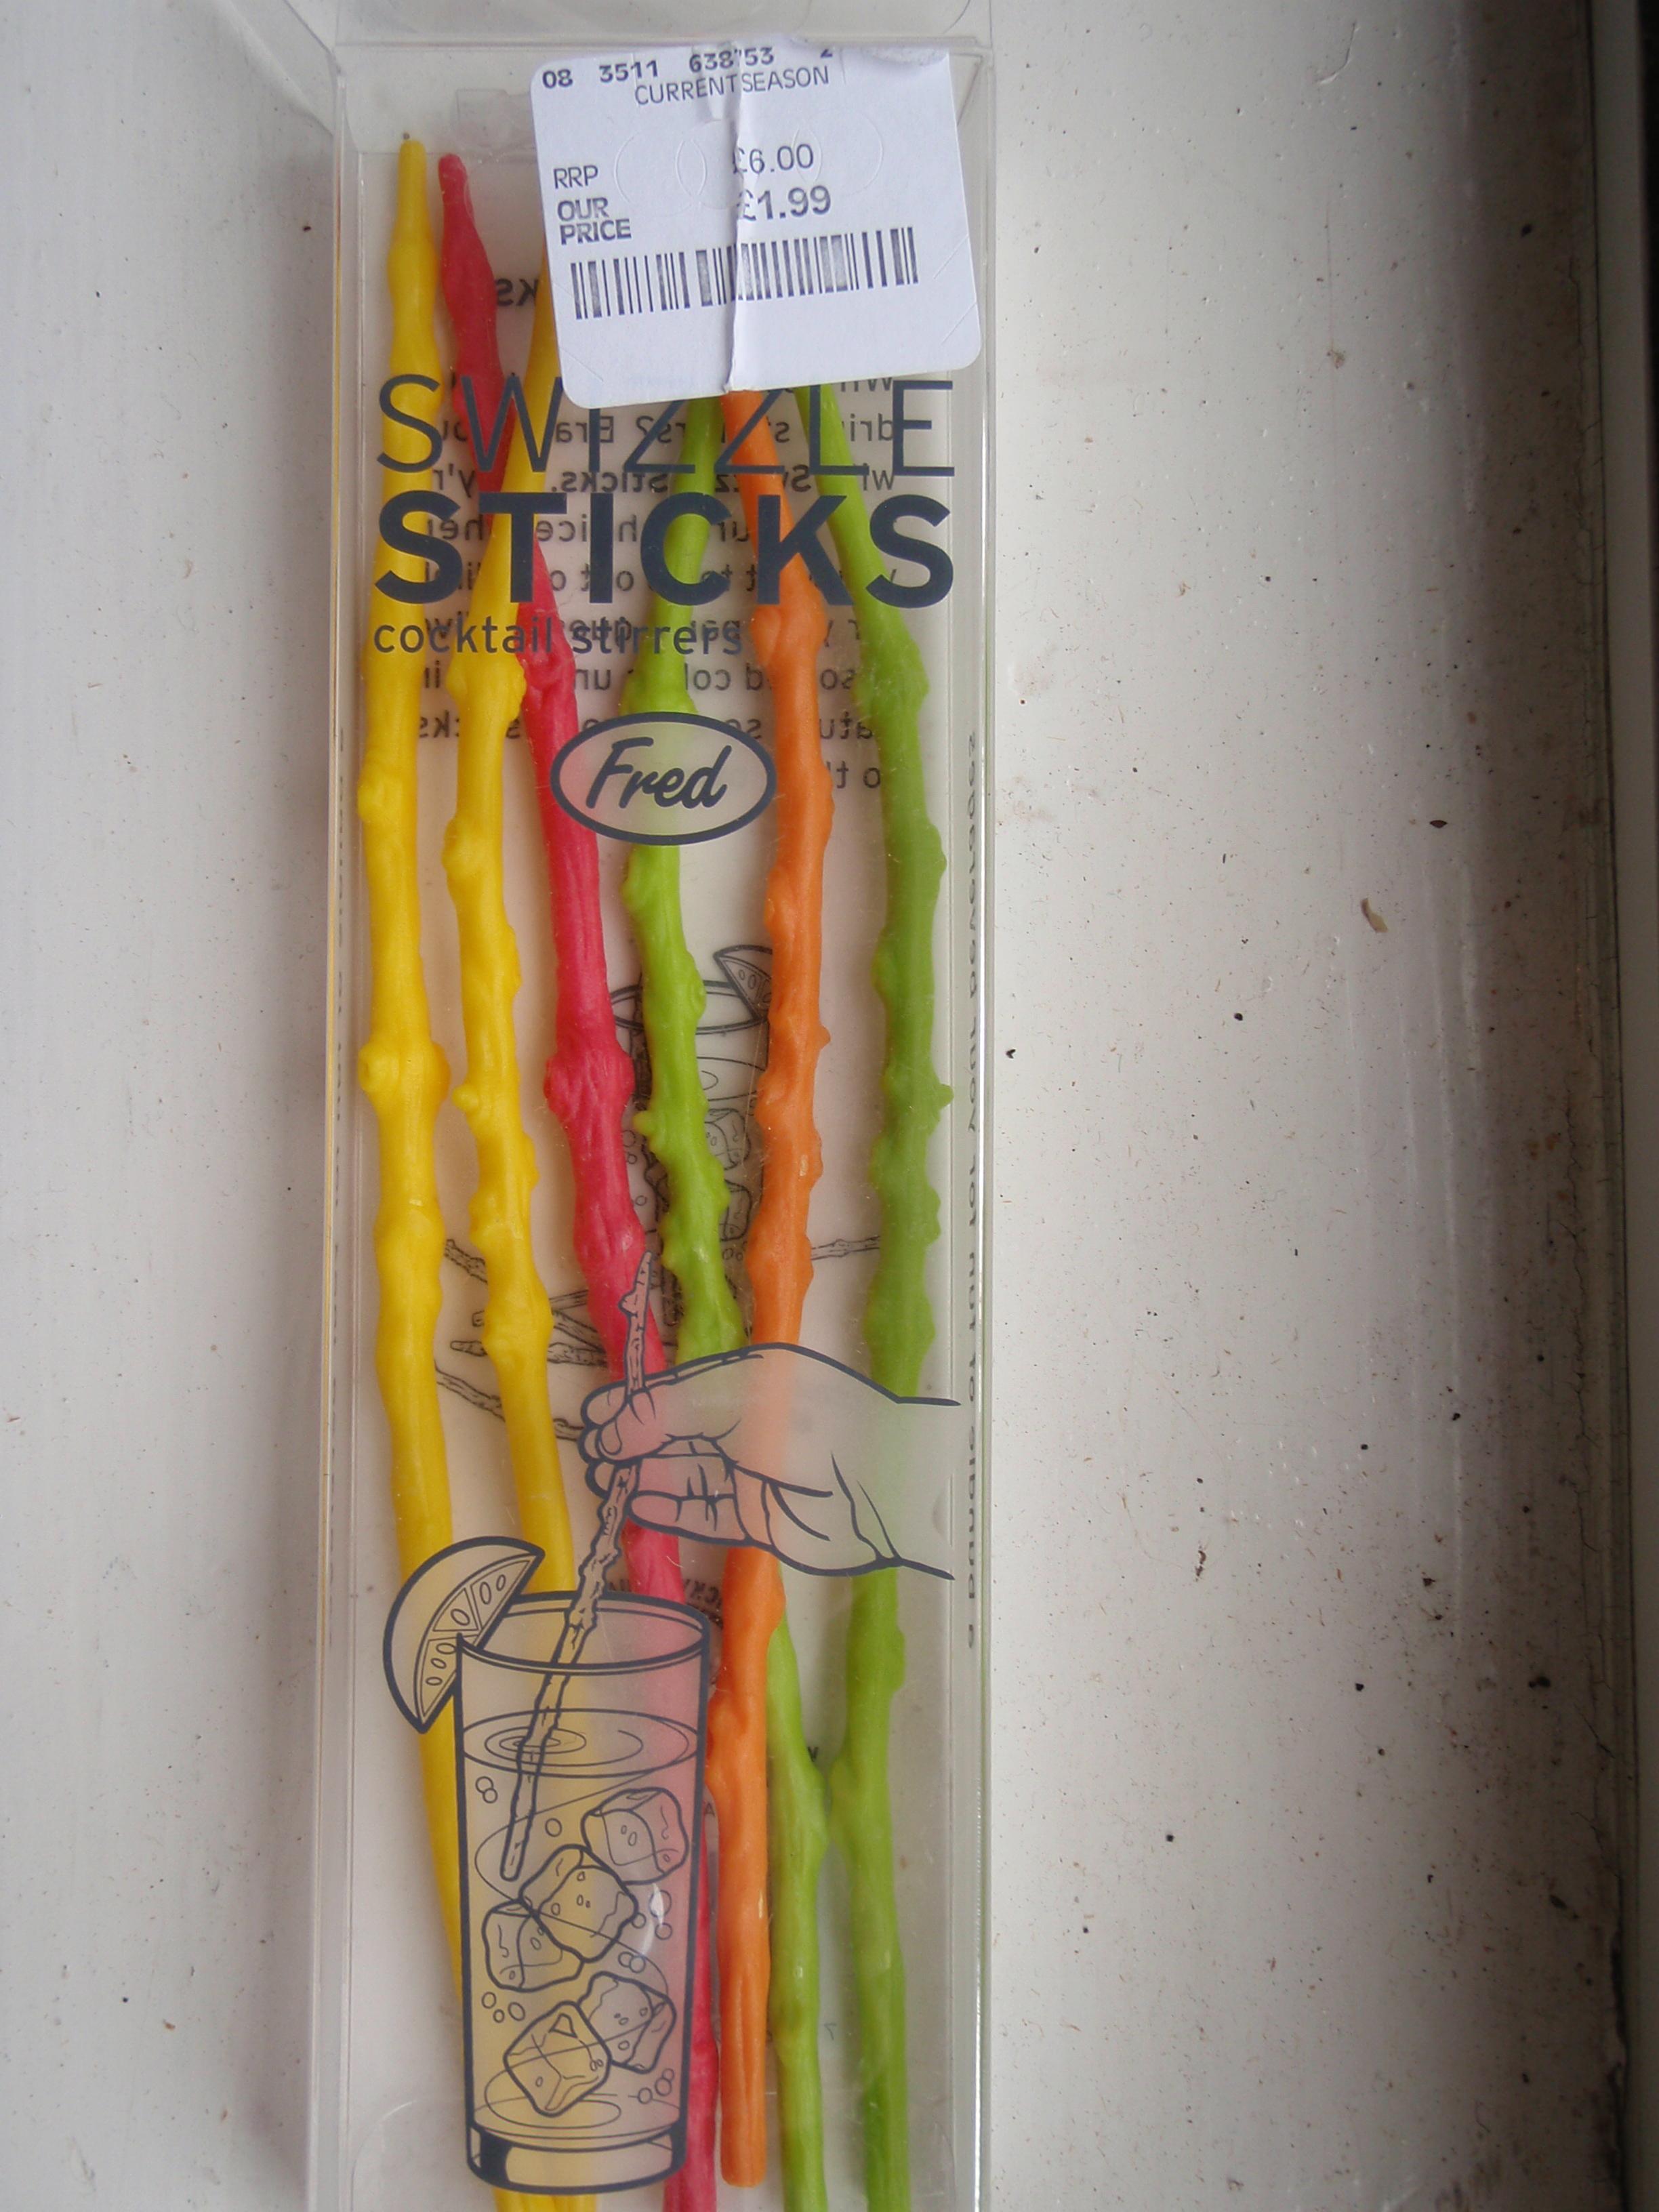 Fred Swizzle Sticks